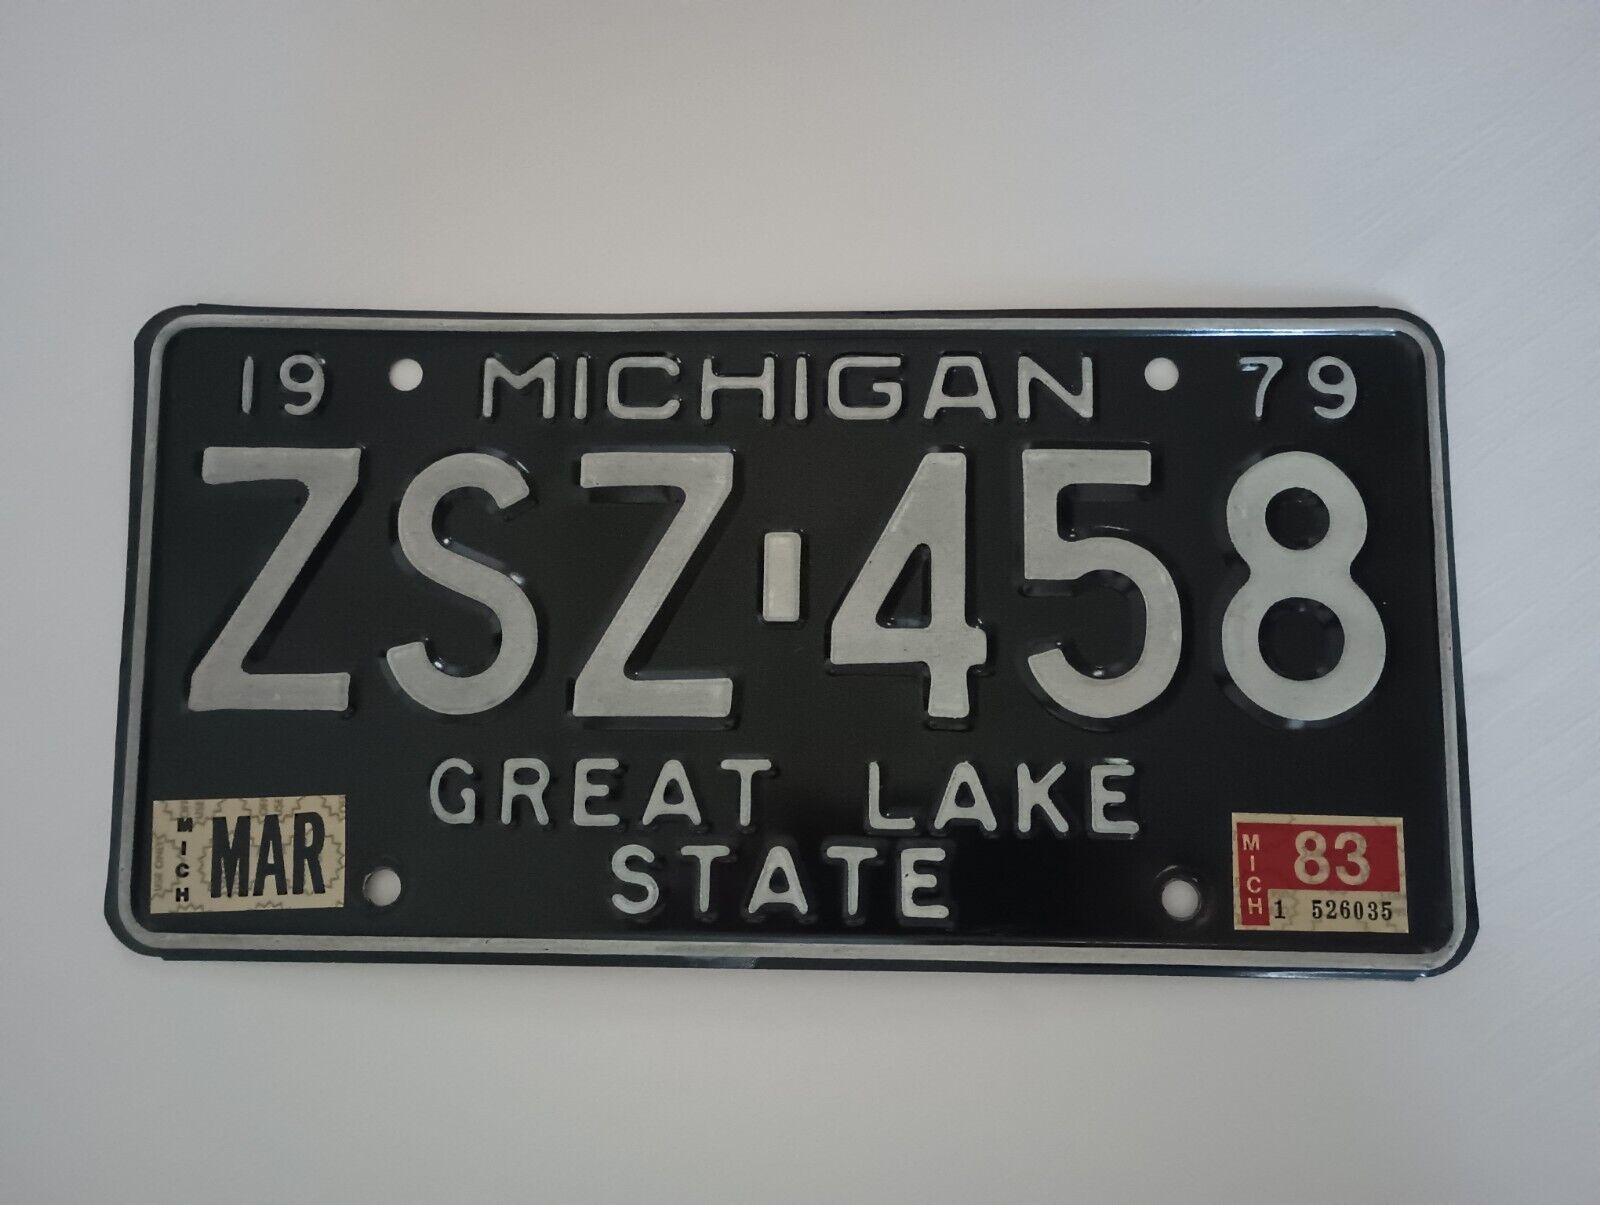 Vintage 1979 Michigan License Plate # Zsz - 458